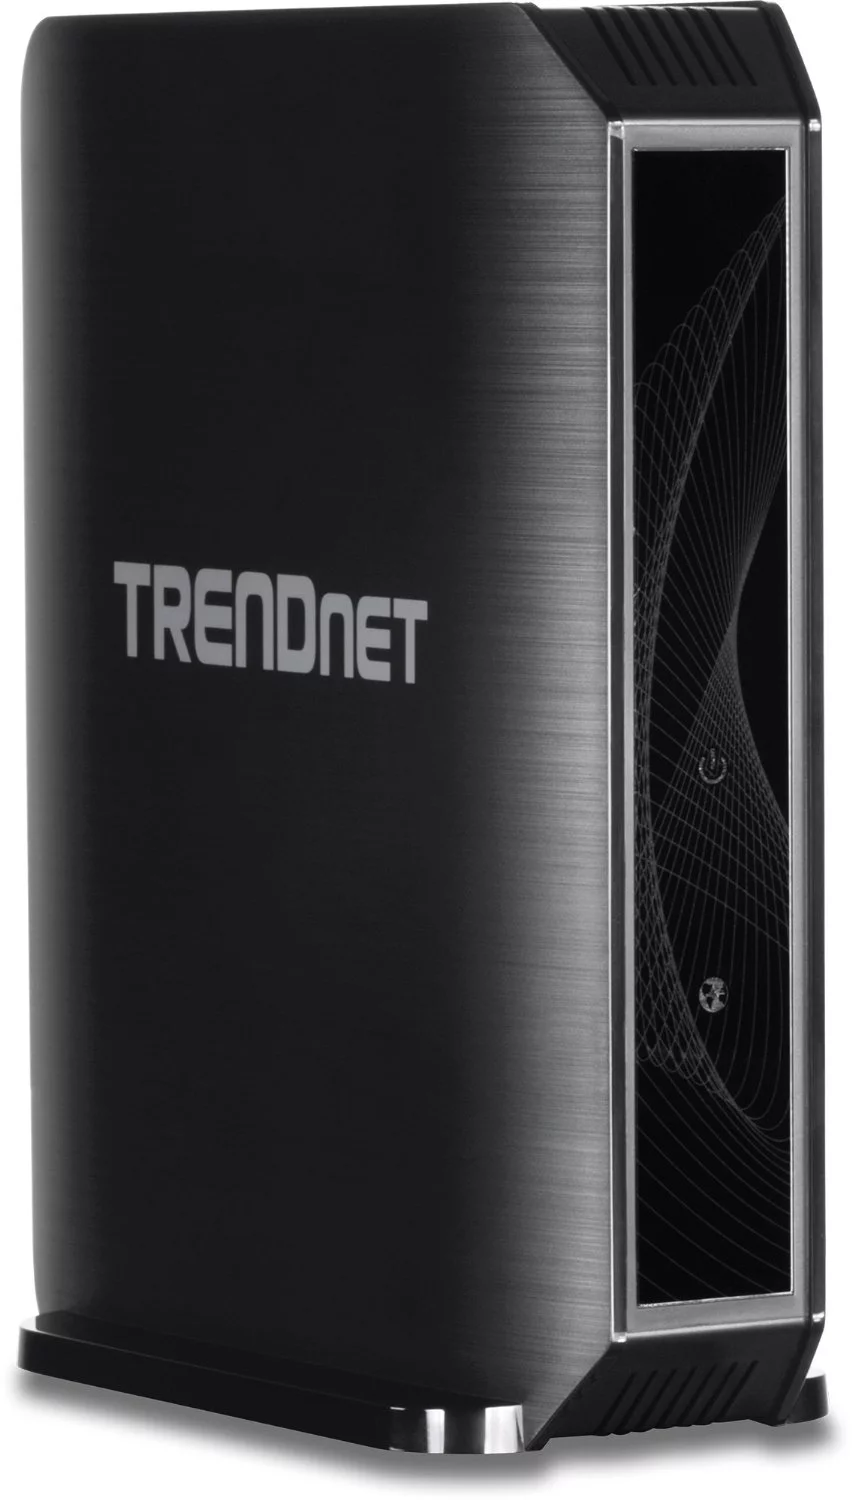 TRENDnet TEW-824DRU AC1750 Dual Band Wireless AC Gigabit Router